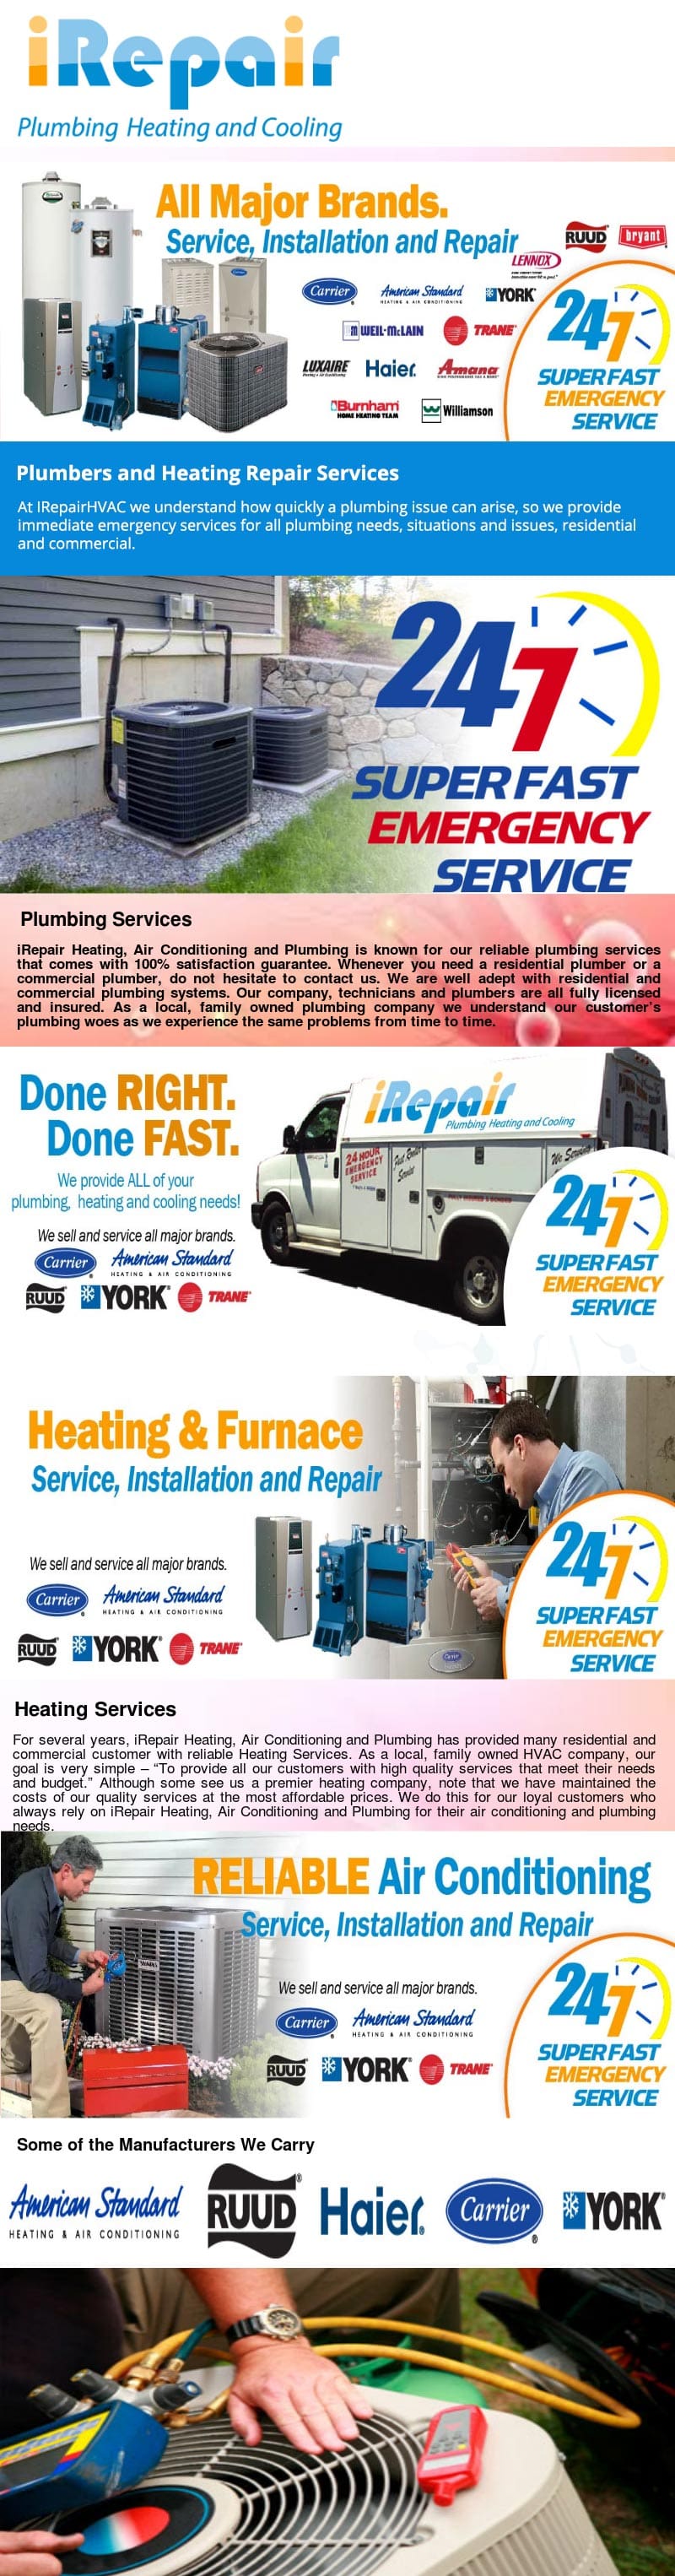 iRepair Plumbing Heating